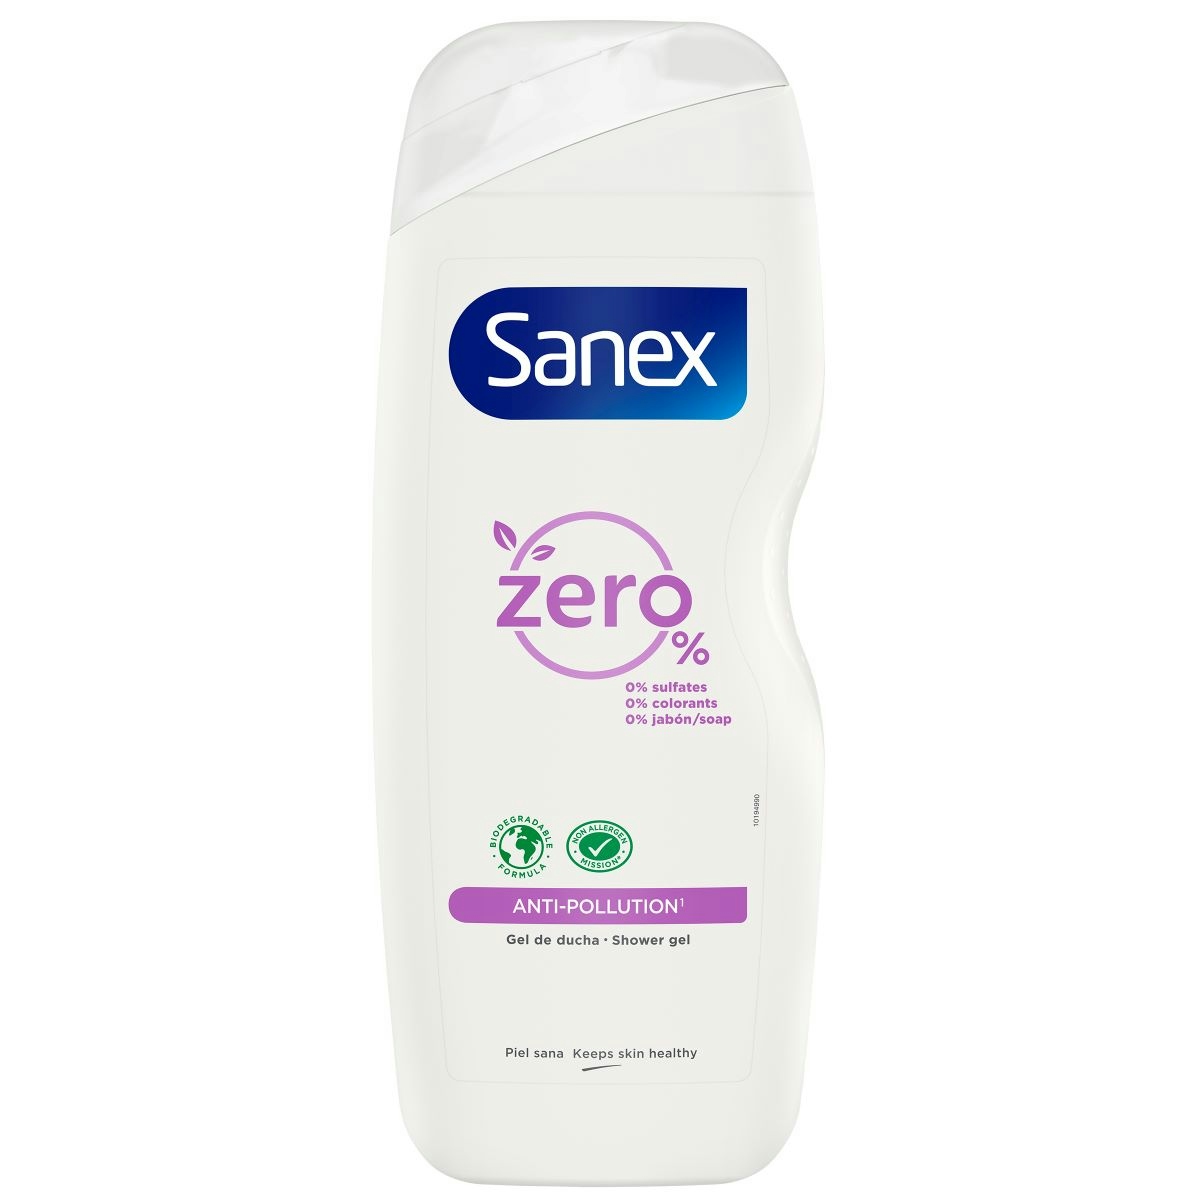 Gel de ducha SANEX zero anti pollution 550 ml